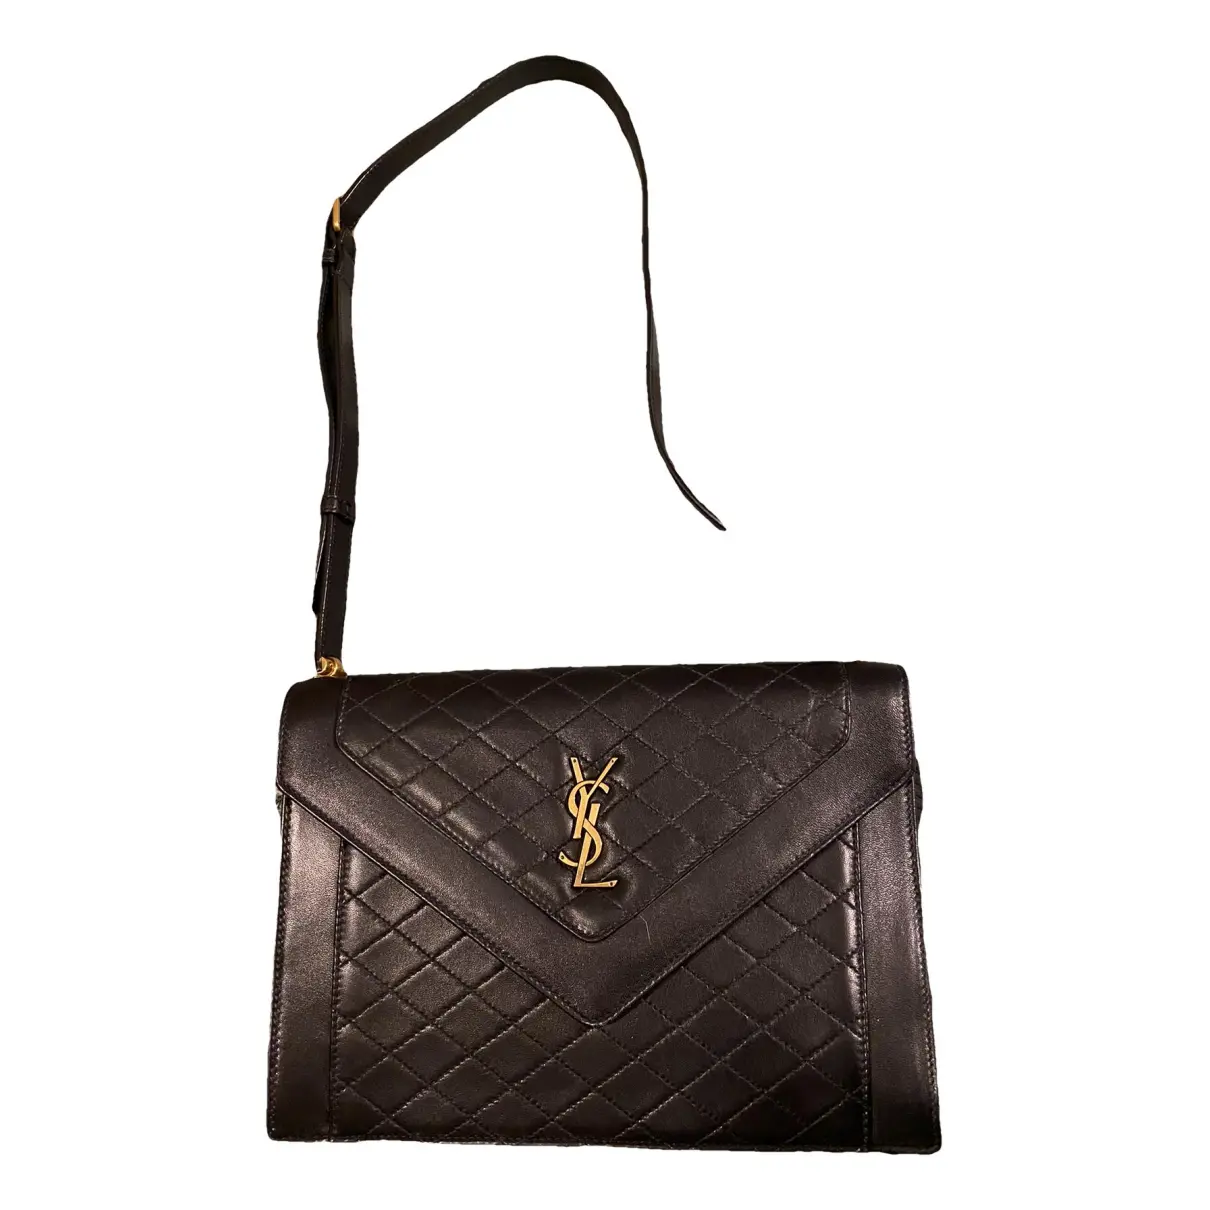 Gaby leather handbag